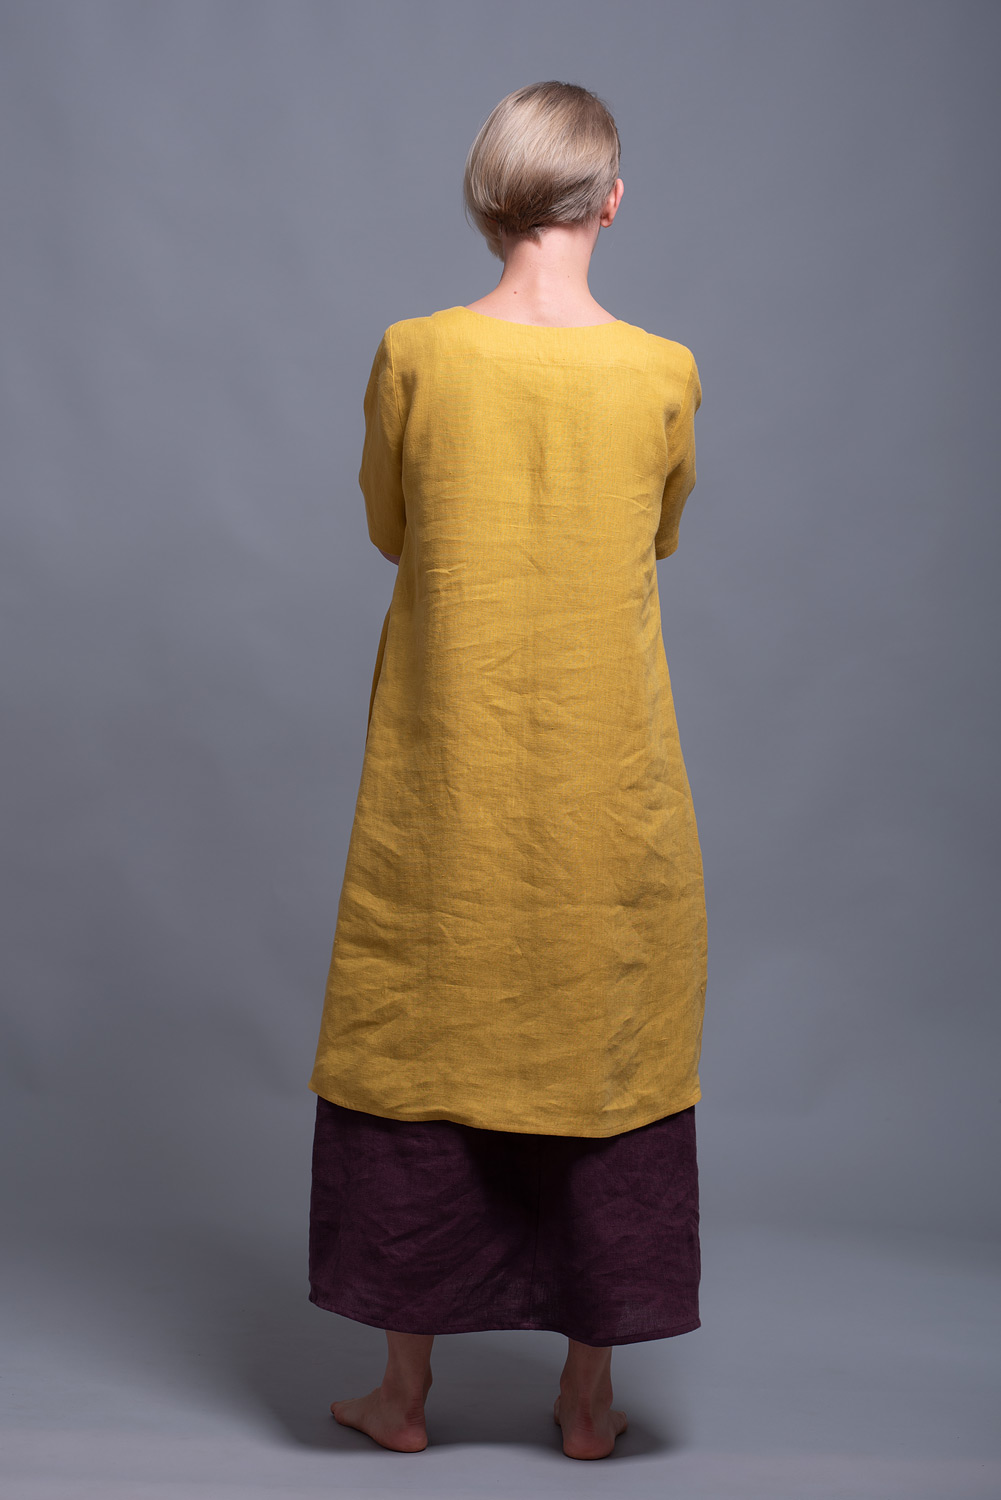 Linen Dress-tunic for Women Size M-L/ Ready to Ship/ Linen Dress